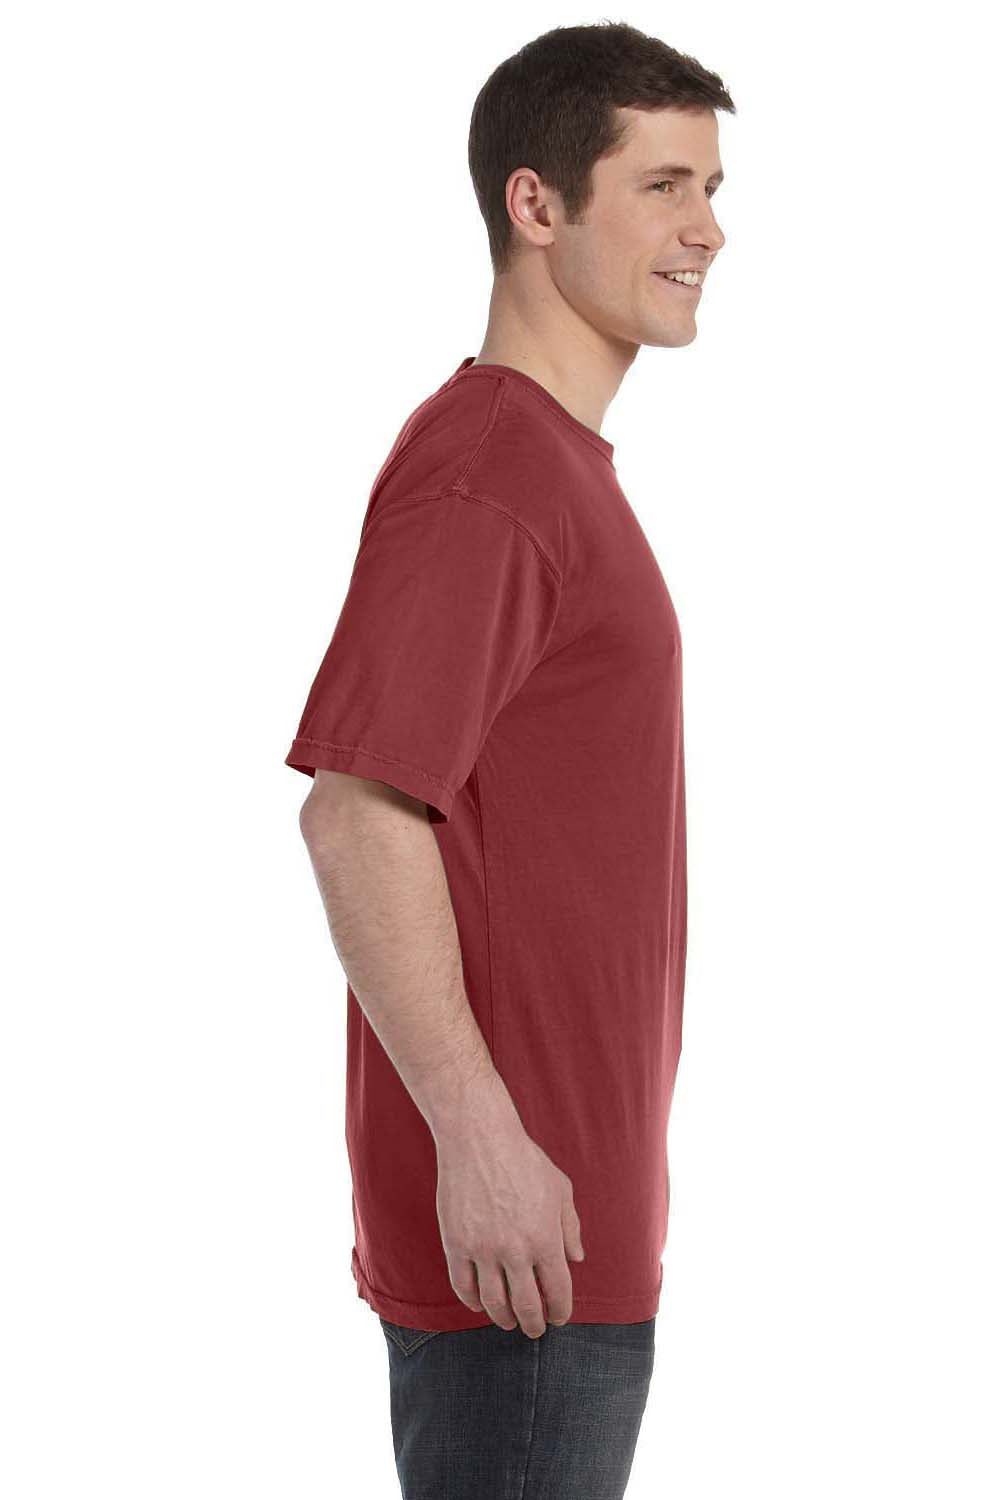 Comfort Colors C4017 Mens Short Sleeve Crewneck T-Shirt Brick Red Side